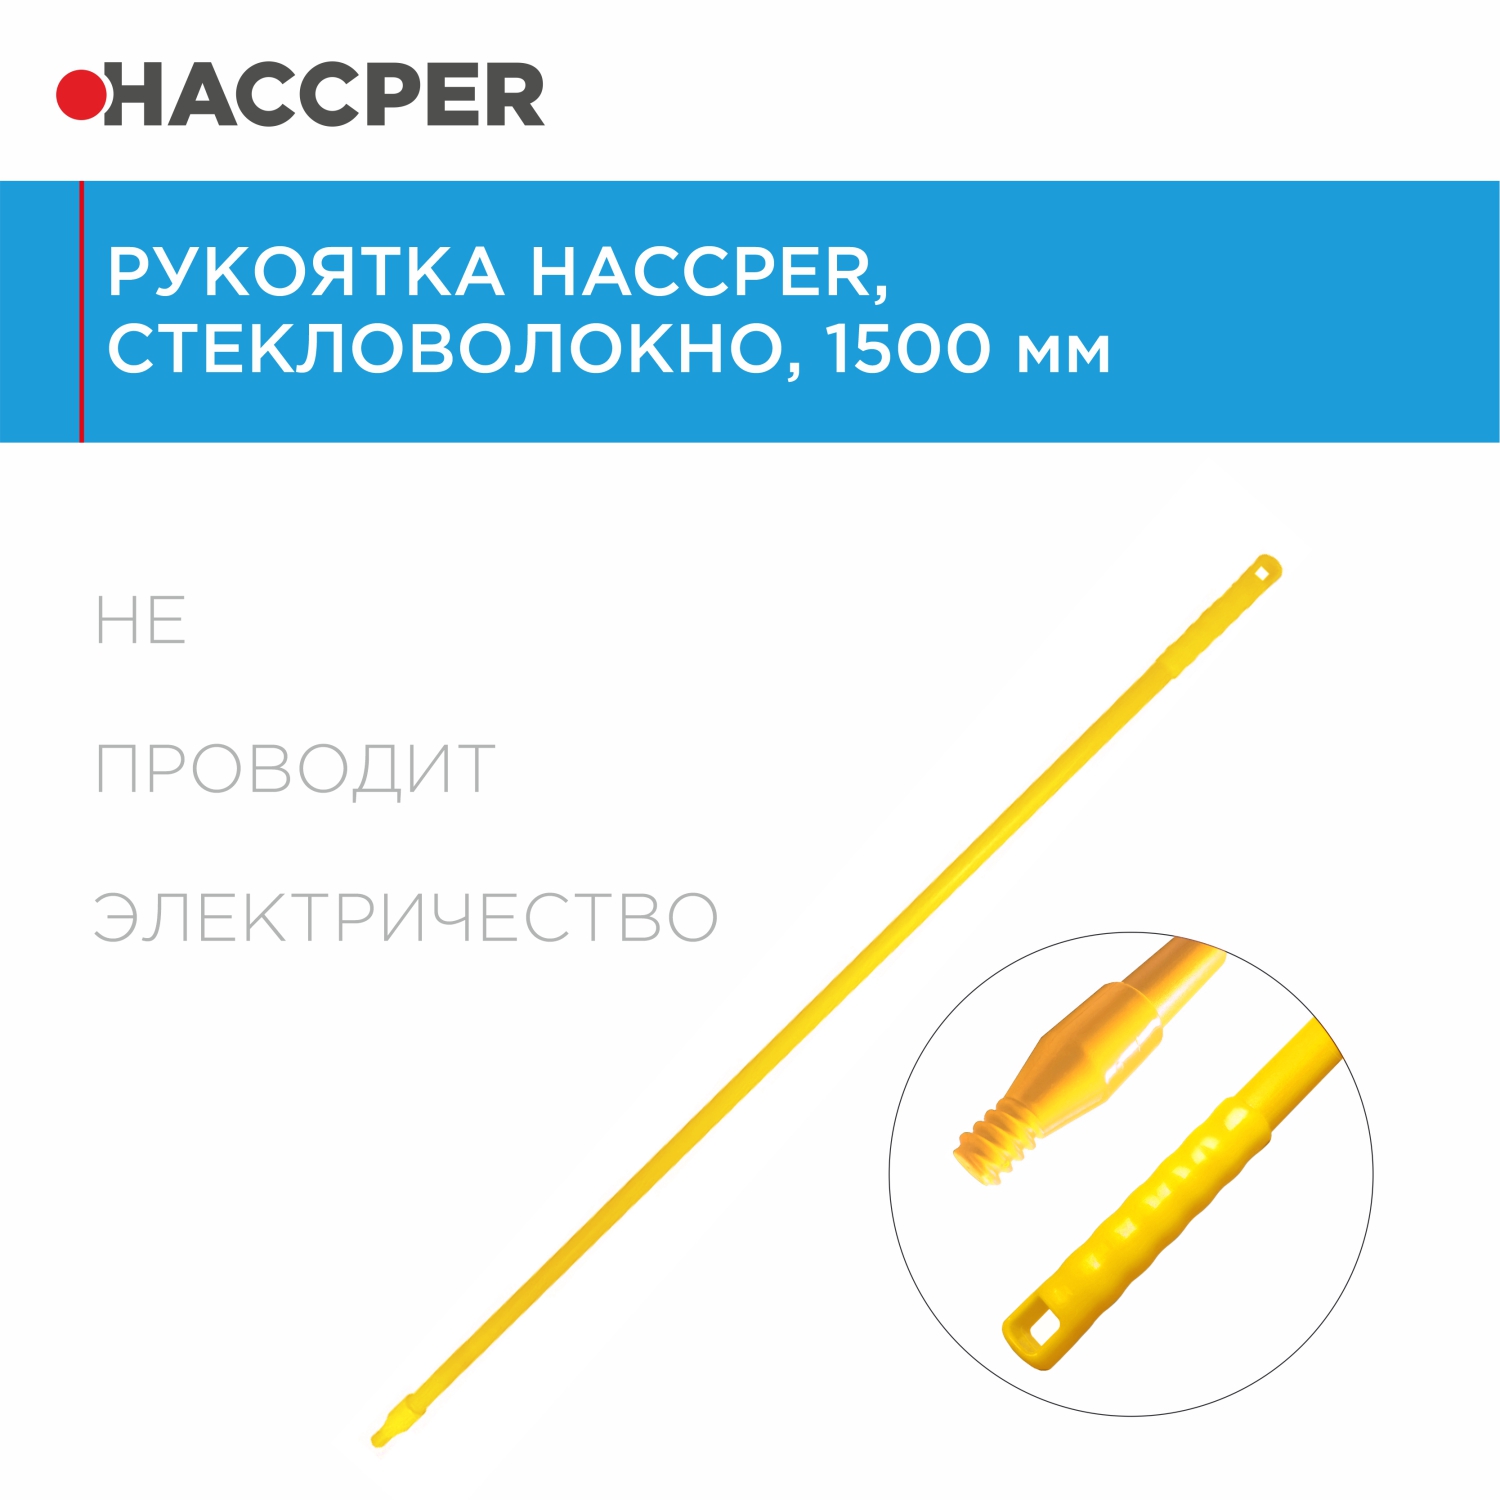 Рукоятка HACCPER стекловолокно, 1500 мм, желтая